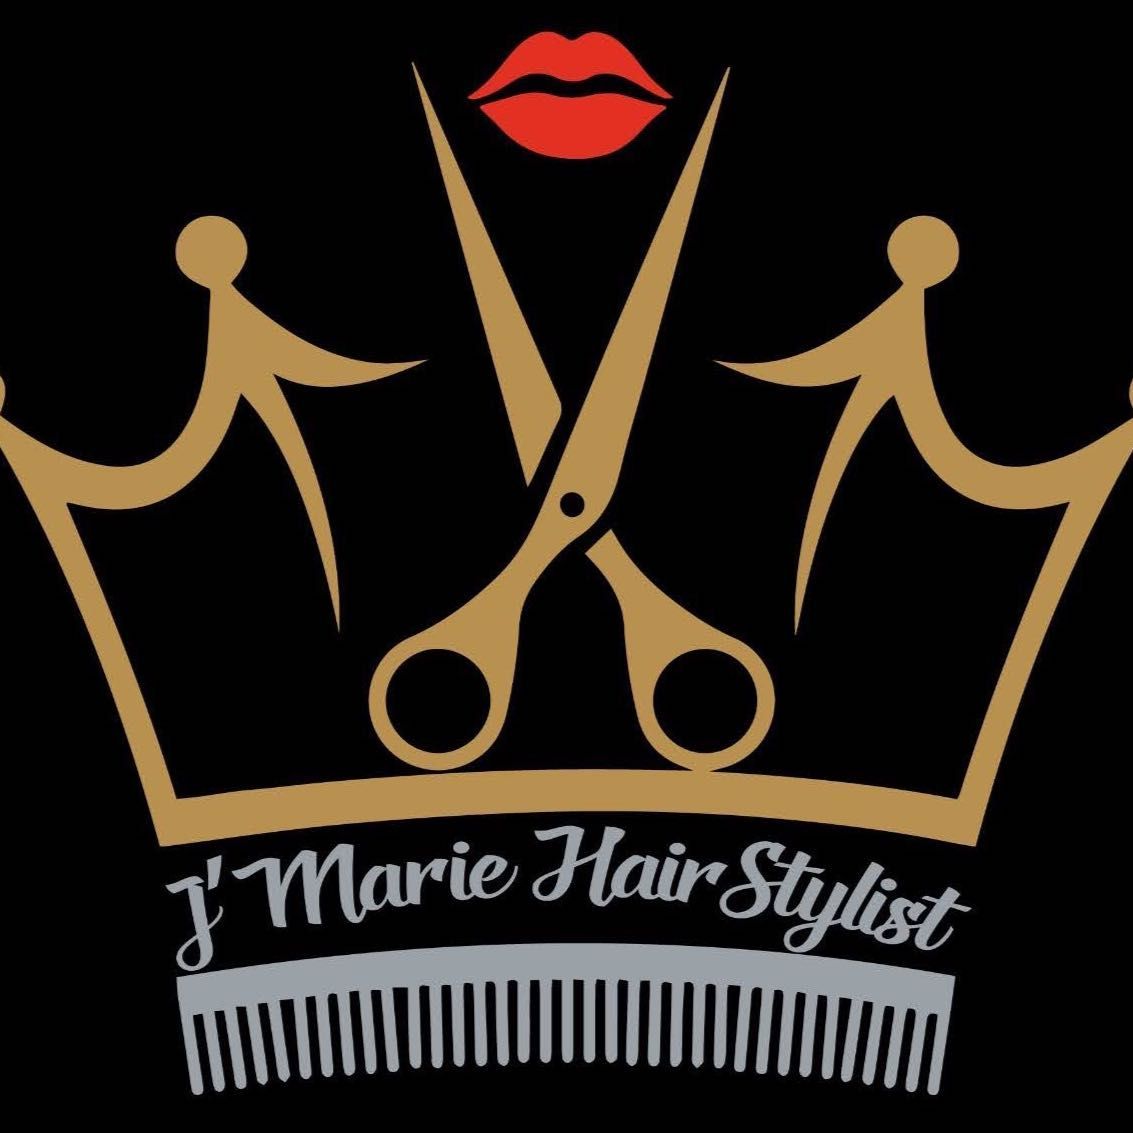 Jmarie Hairstylist, 1046 Avenida Hostos med centro, Ponce, 00716